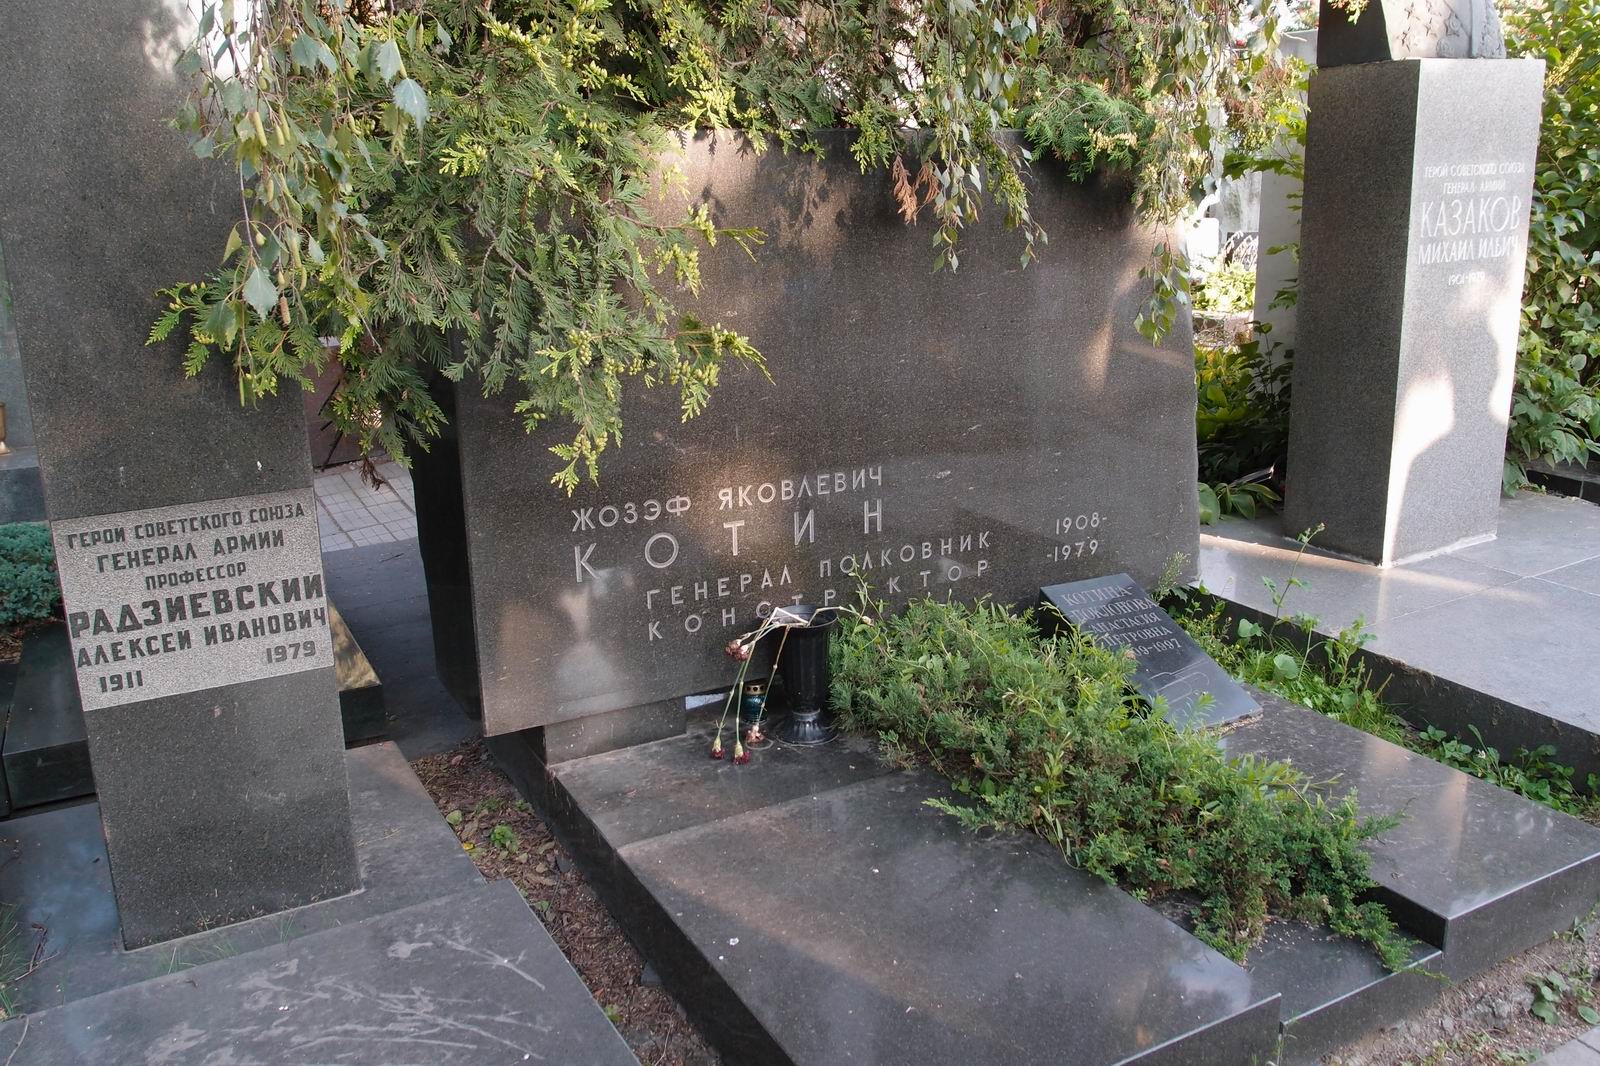 Памятник на могиле Котина Ж.Я. (1908-1979), на Новодевичьем кладбище (7-16-14).